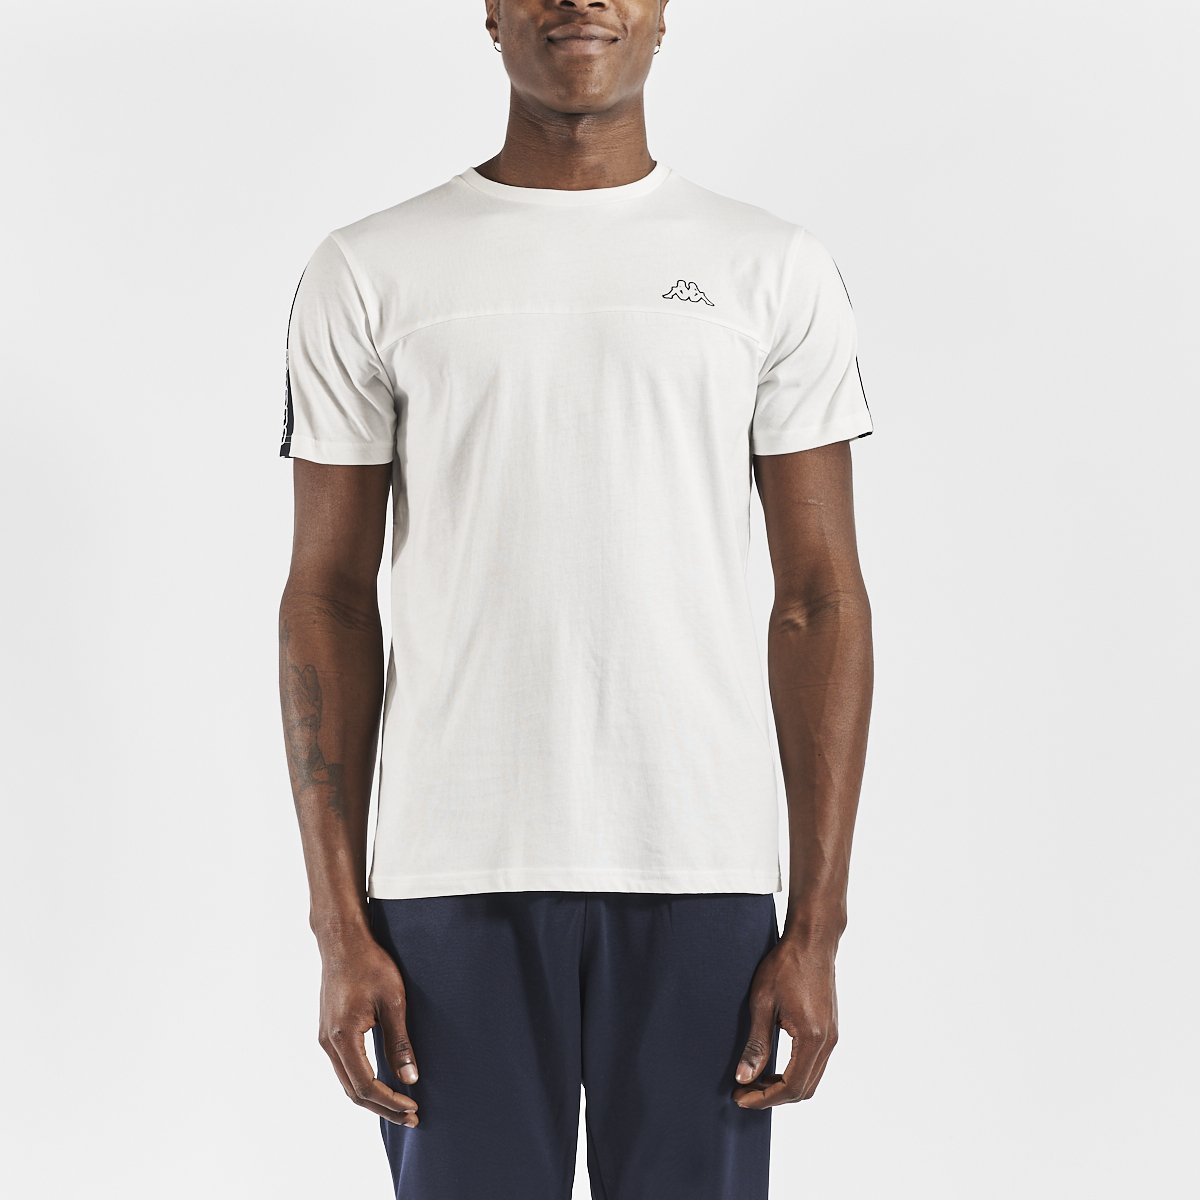 Camiseta Itap hombre blanco - Imagen 4